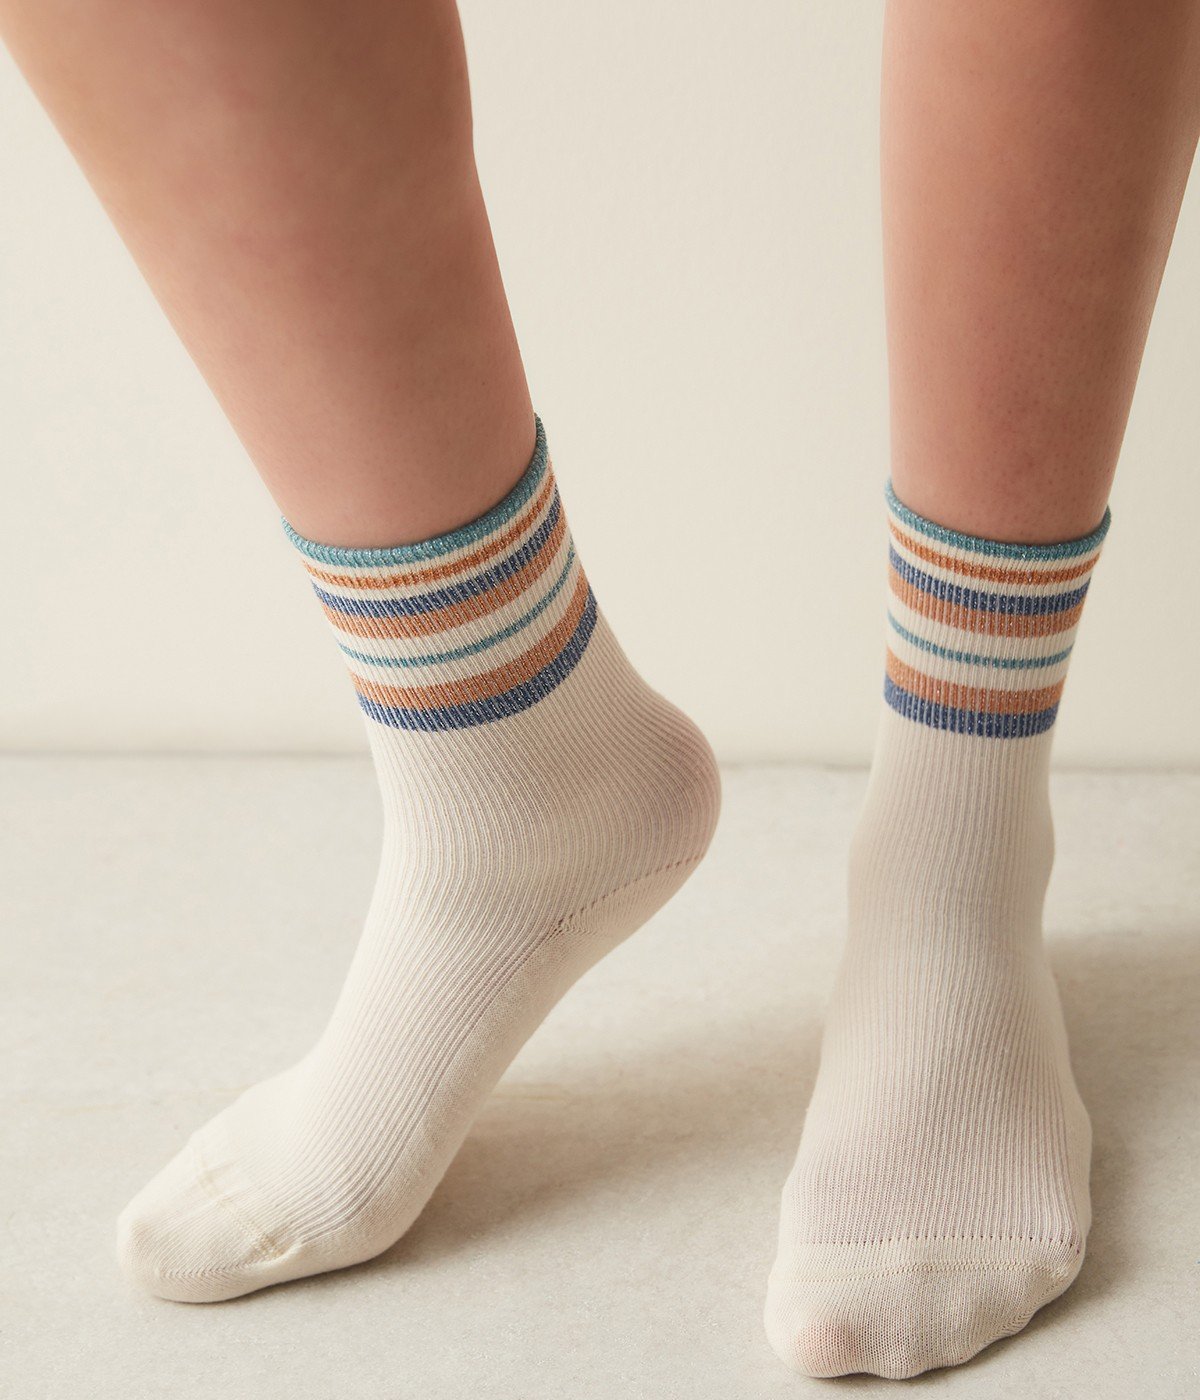 Shiny Ankle Socket Socks